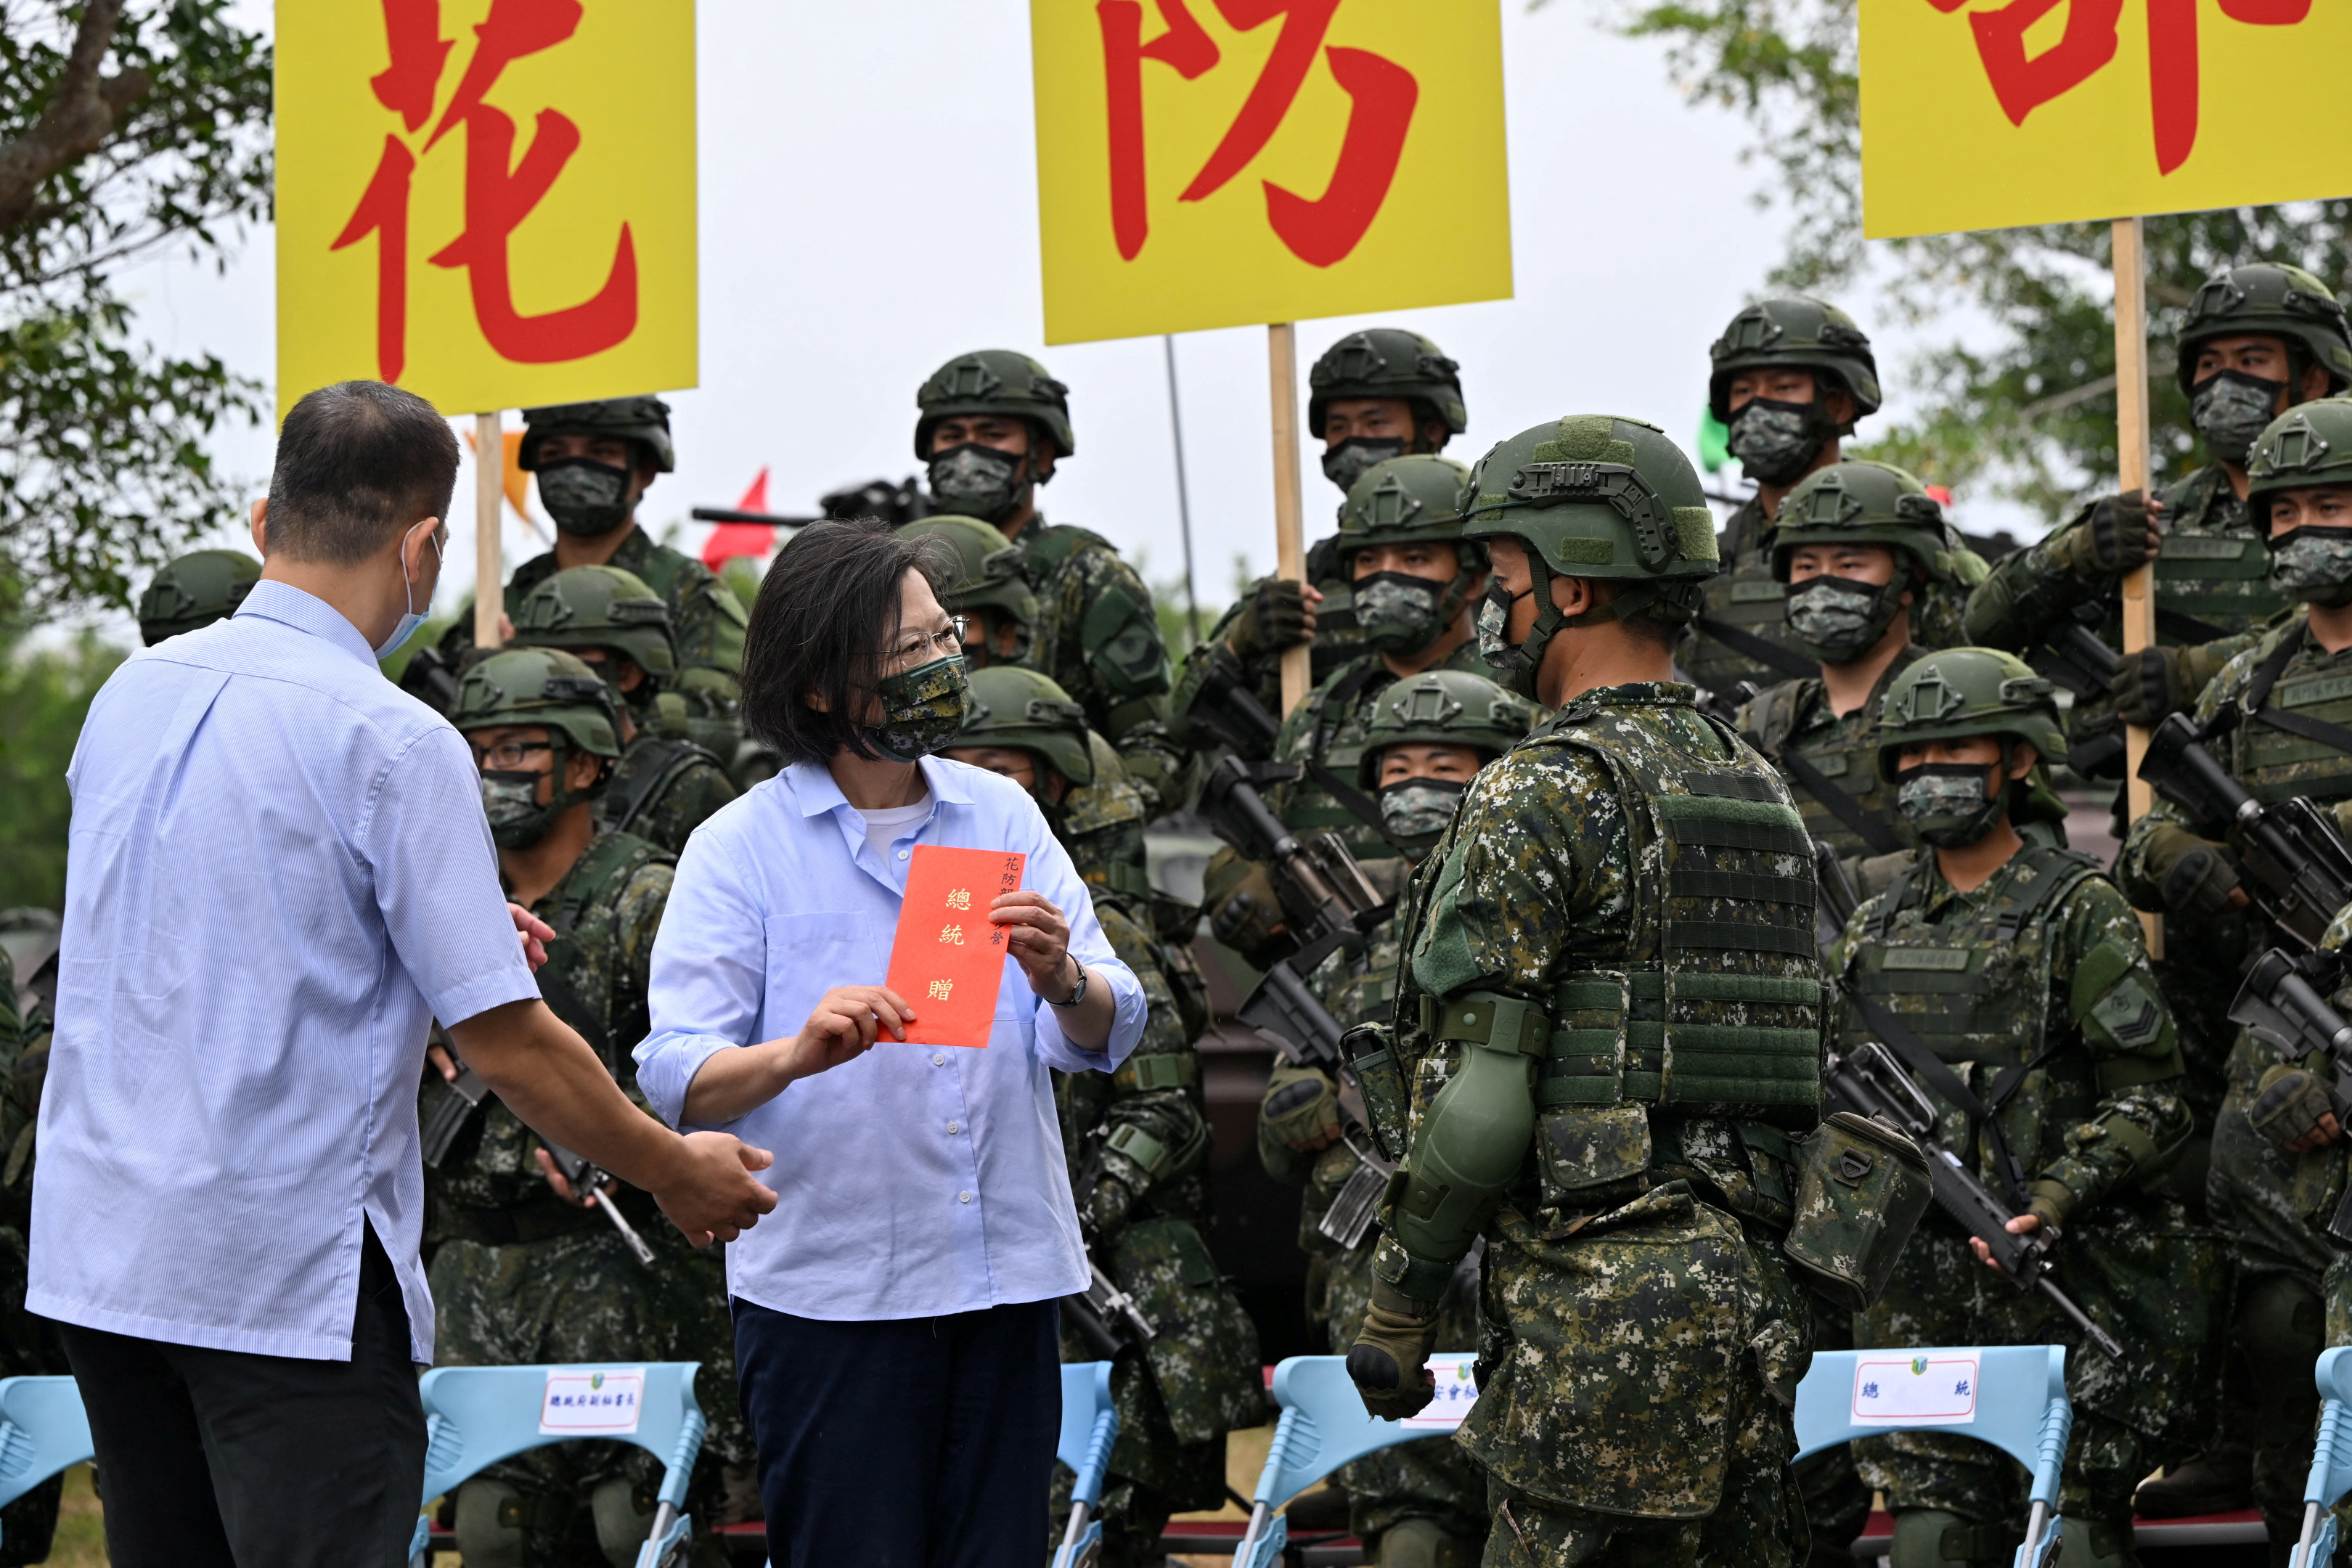 Taiwan's President Tsai Ing-wen visits the military base in Hualien